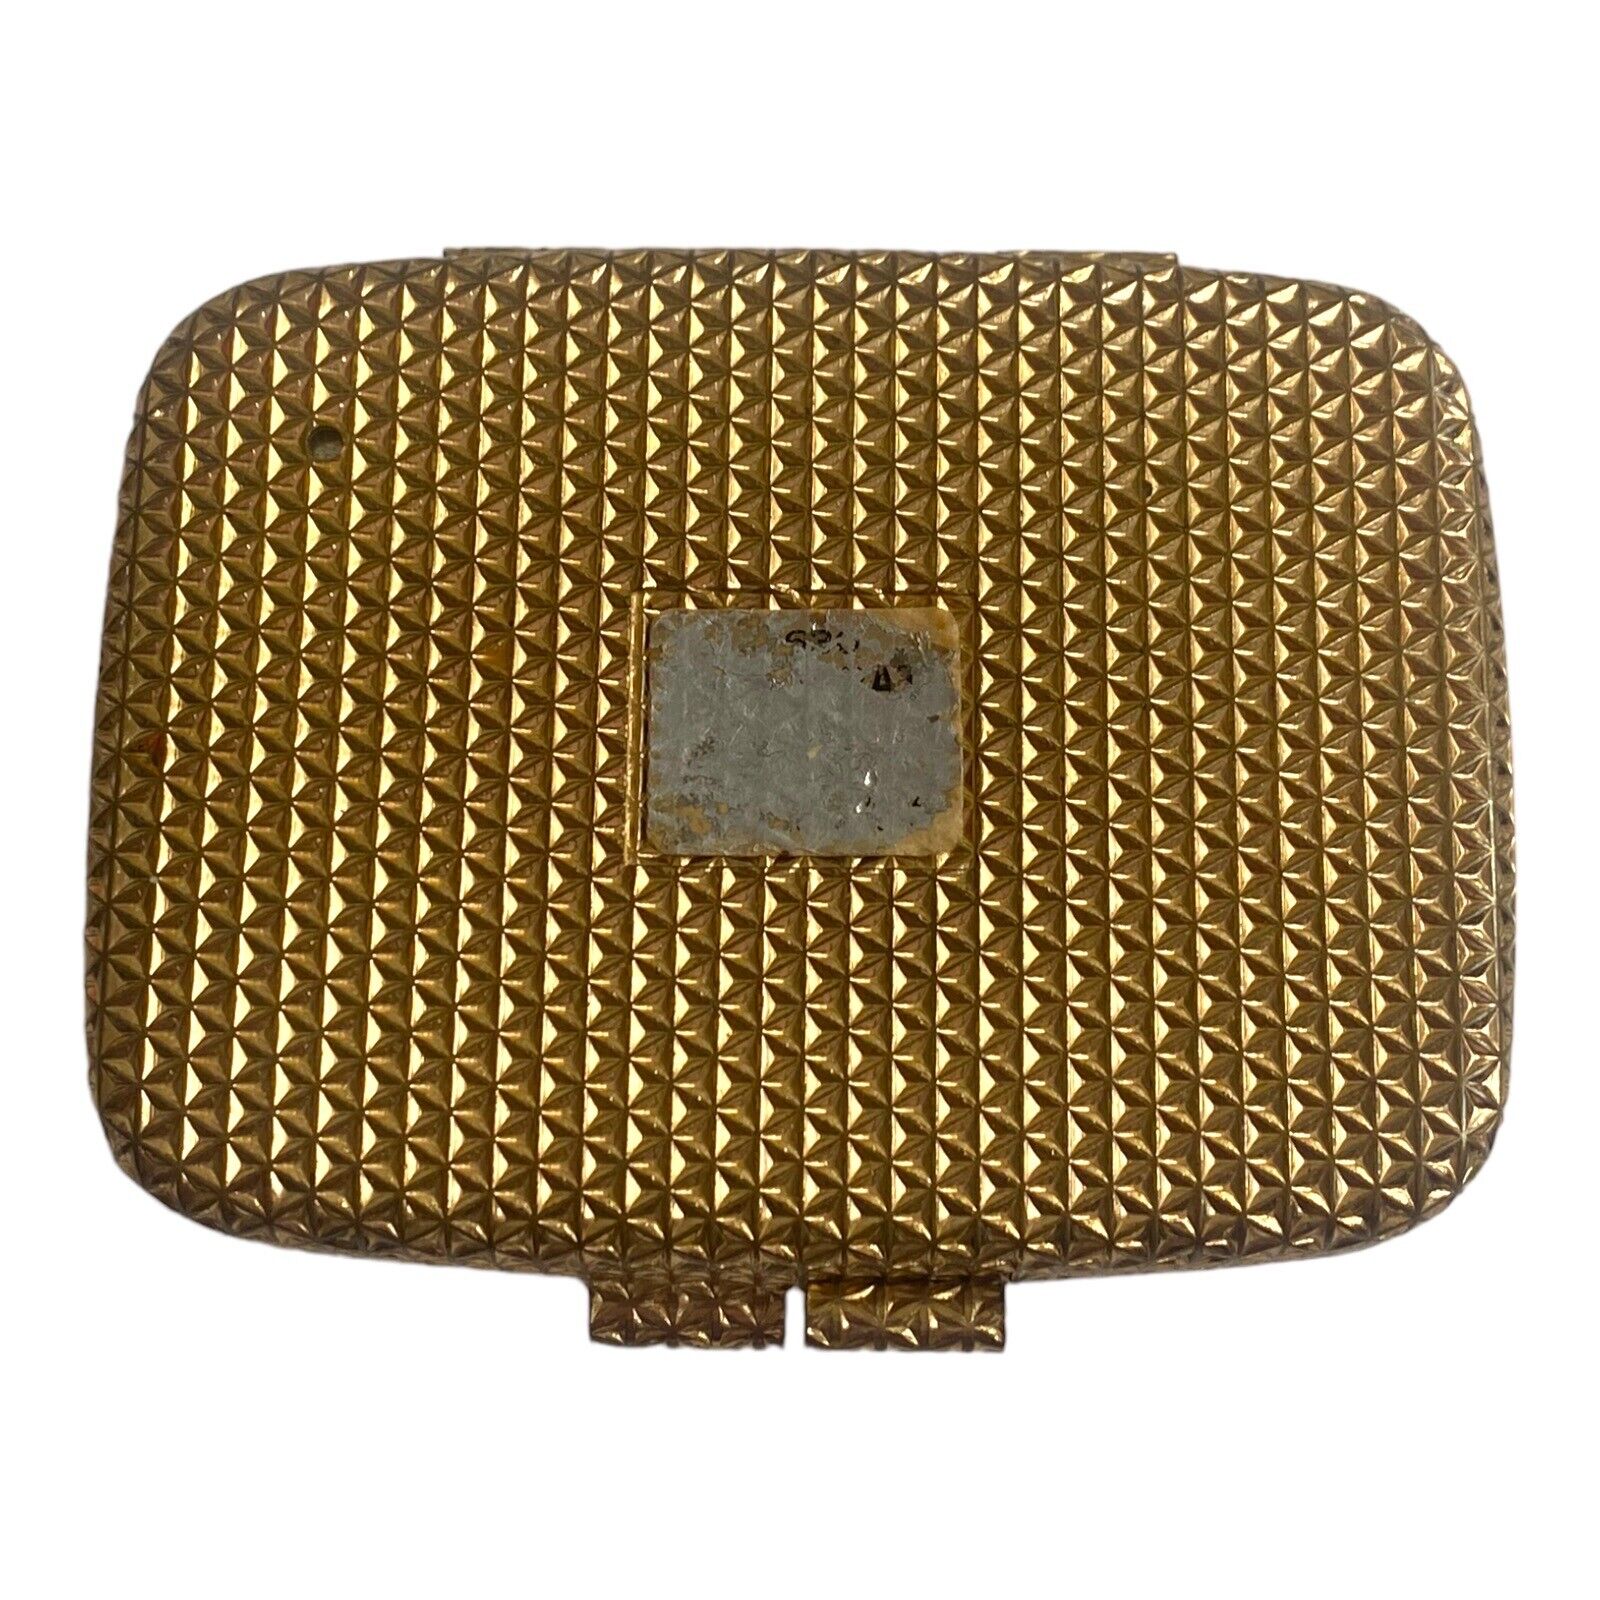 VTG 1960s REVLON Petite Compact Powder Case VAN CLEEF & ARPELS Mirror Gold Tone